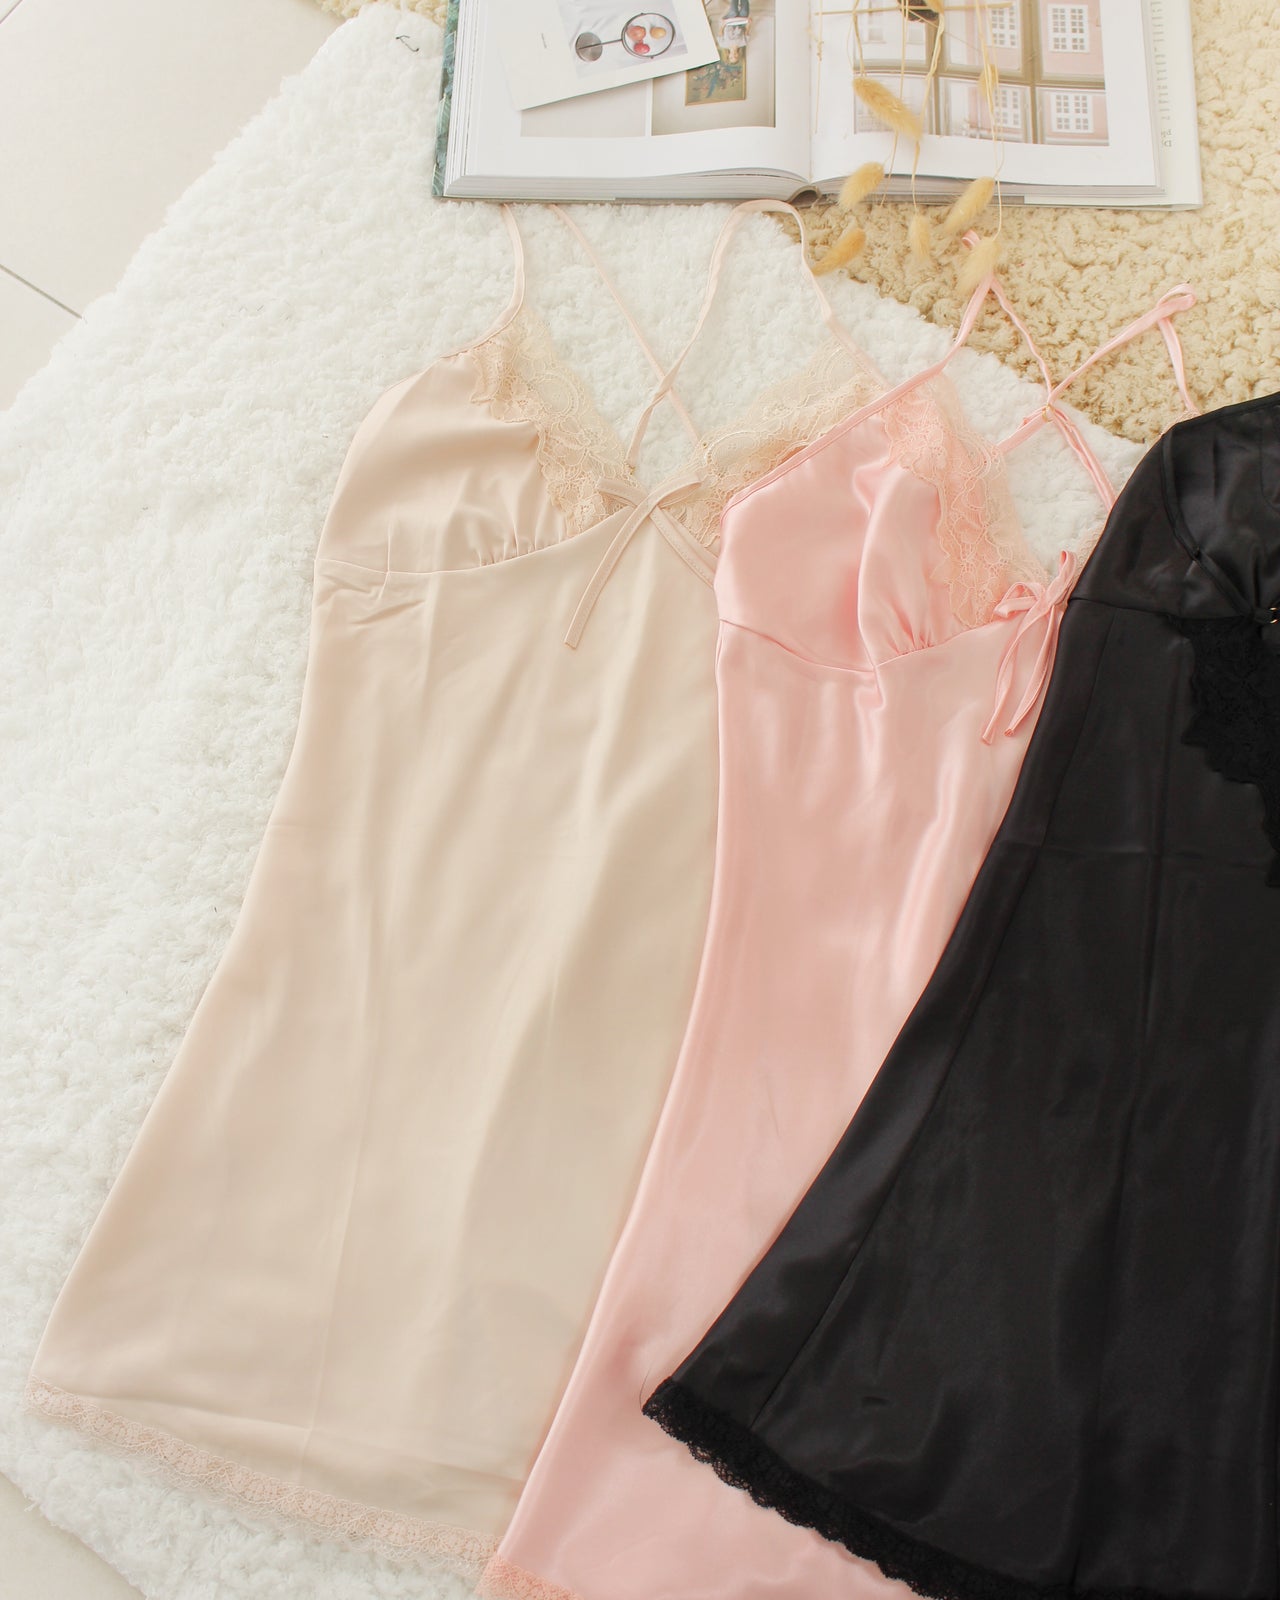 Evie Pyjamas Dress - LovelyMadness Clothing Online Fashion Malaysia